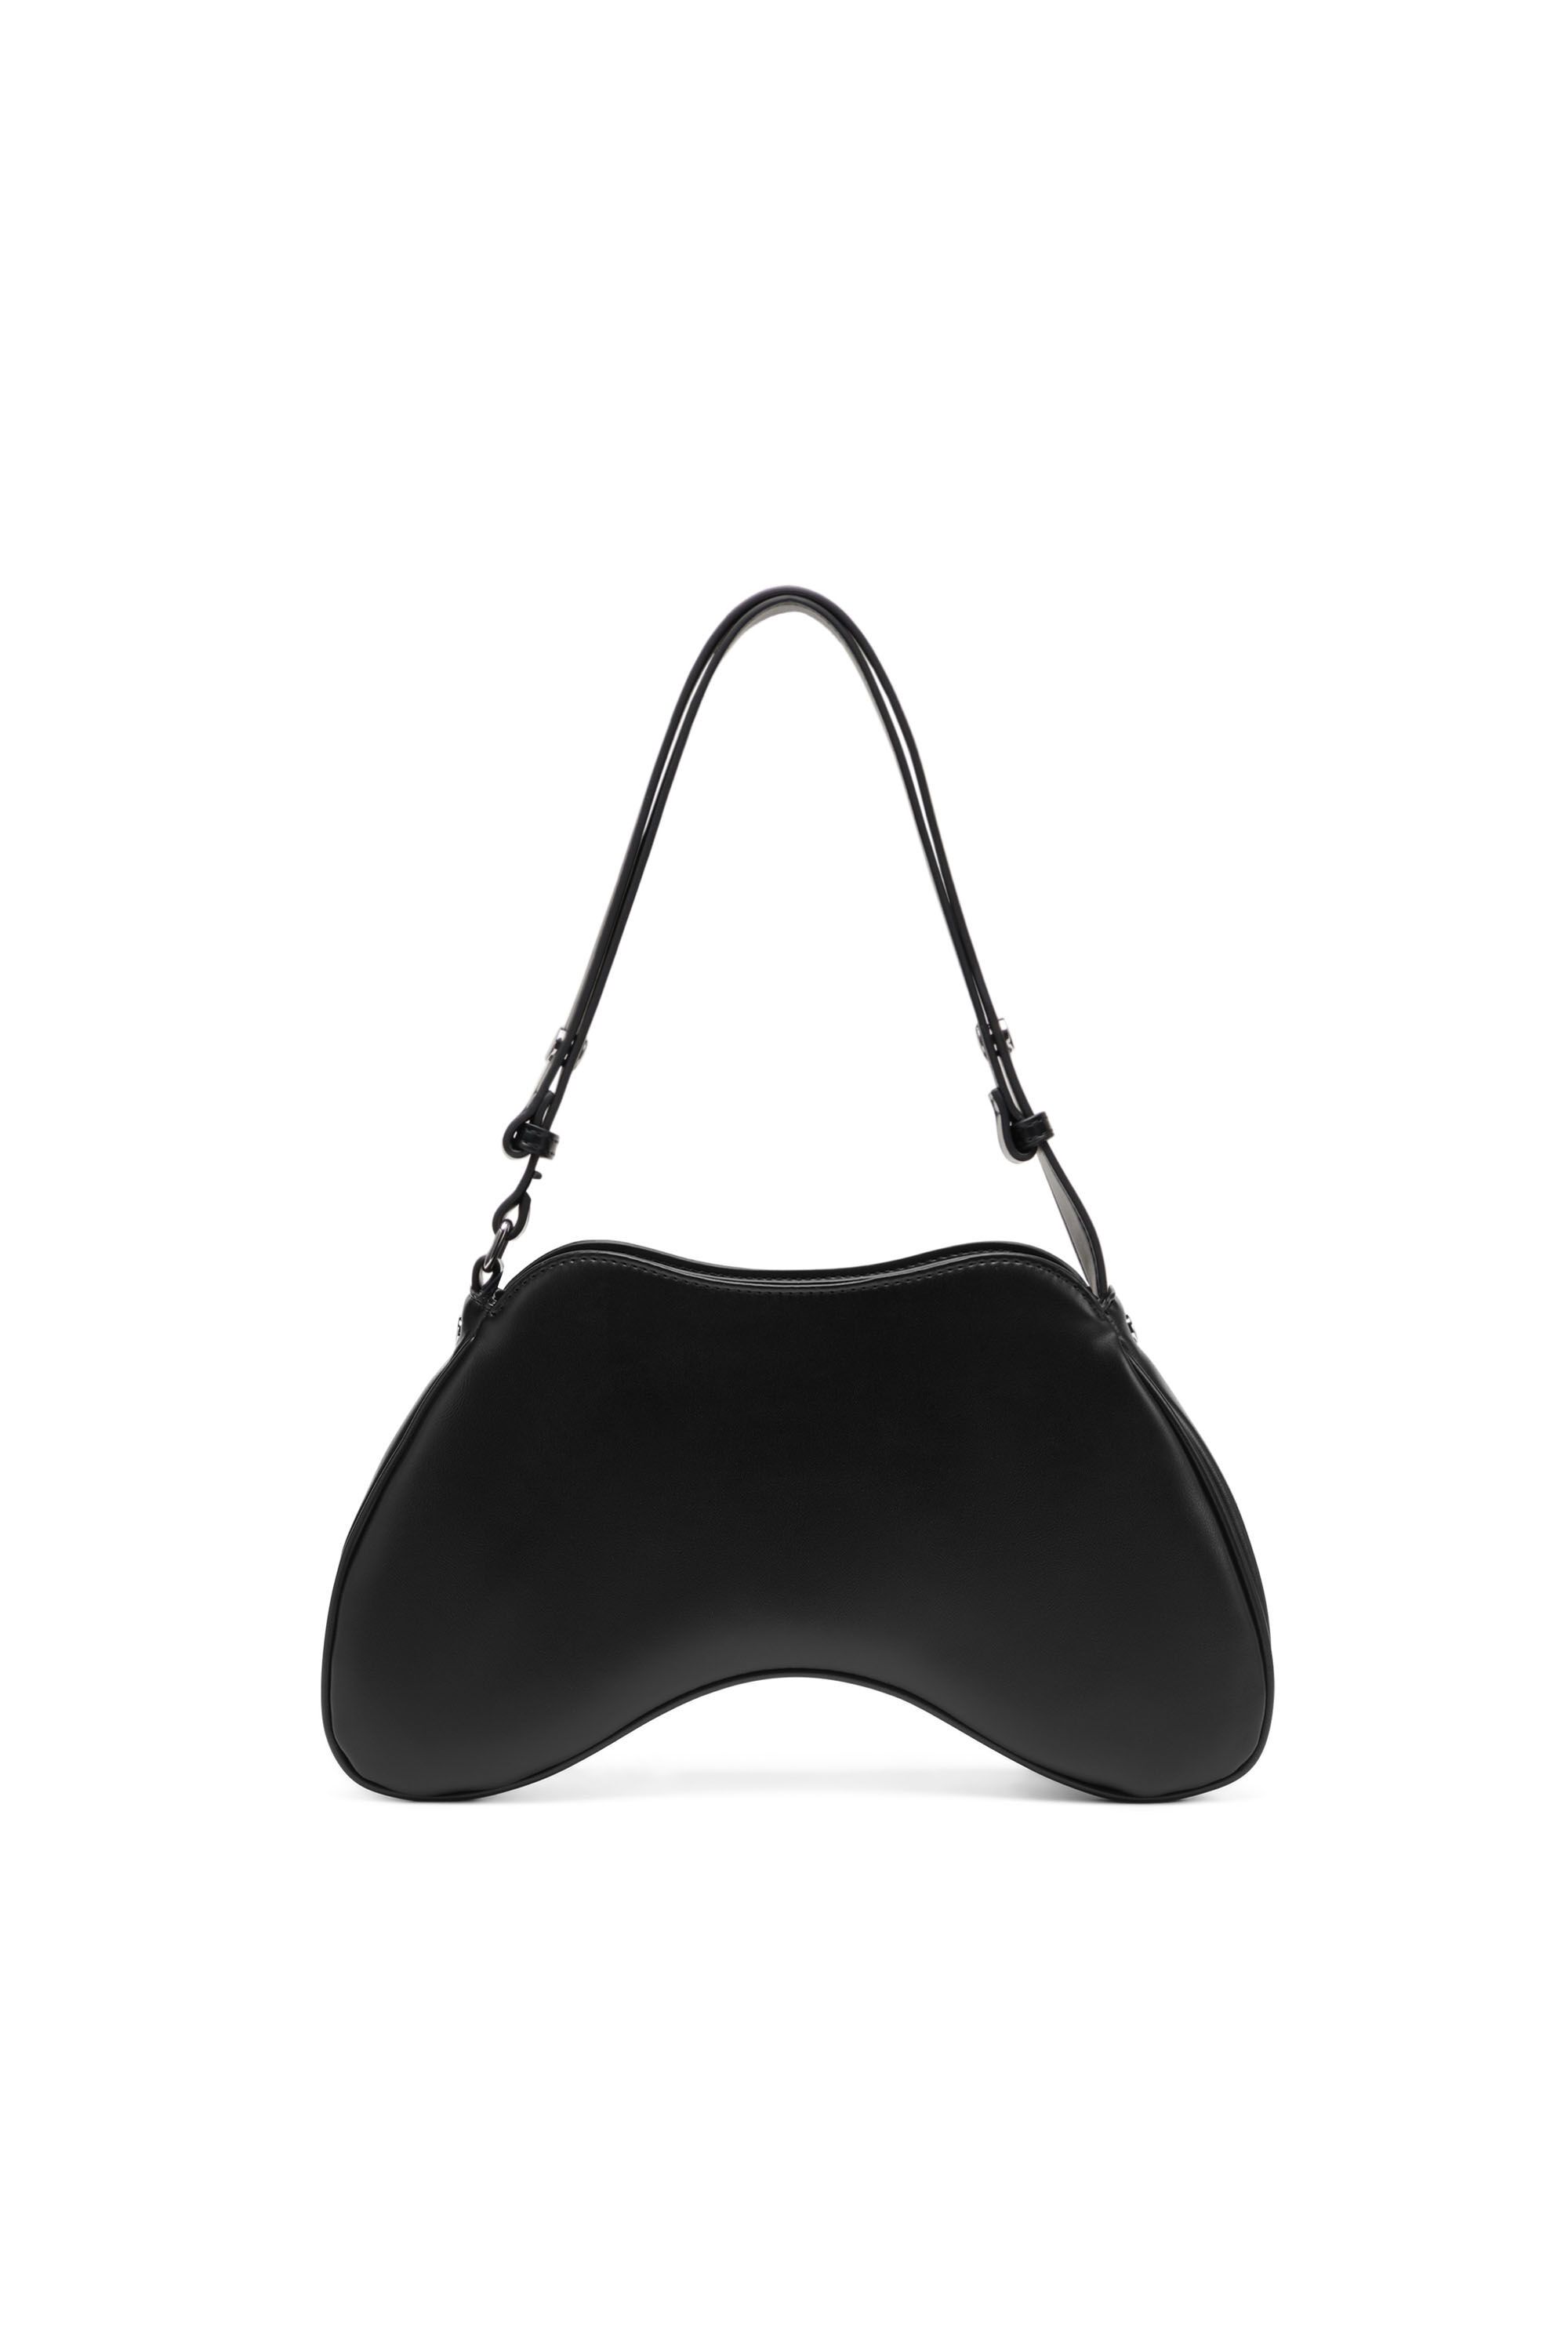 PLAY SHOULDER Woman: two-tone Shoulder bag with D logo | Diesel